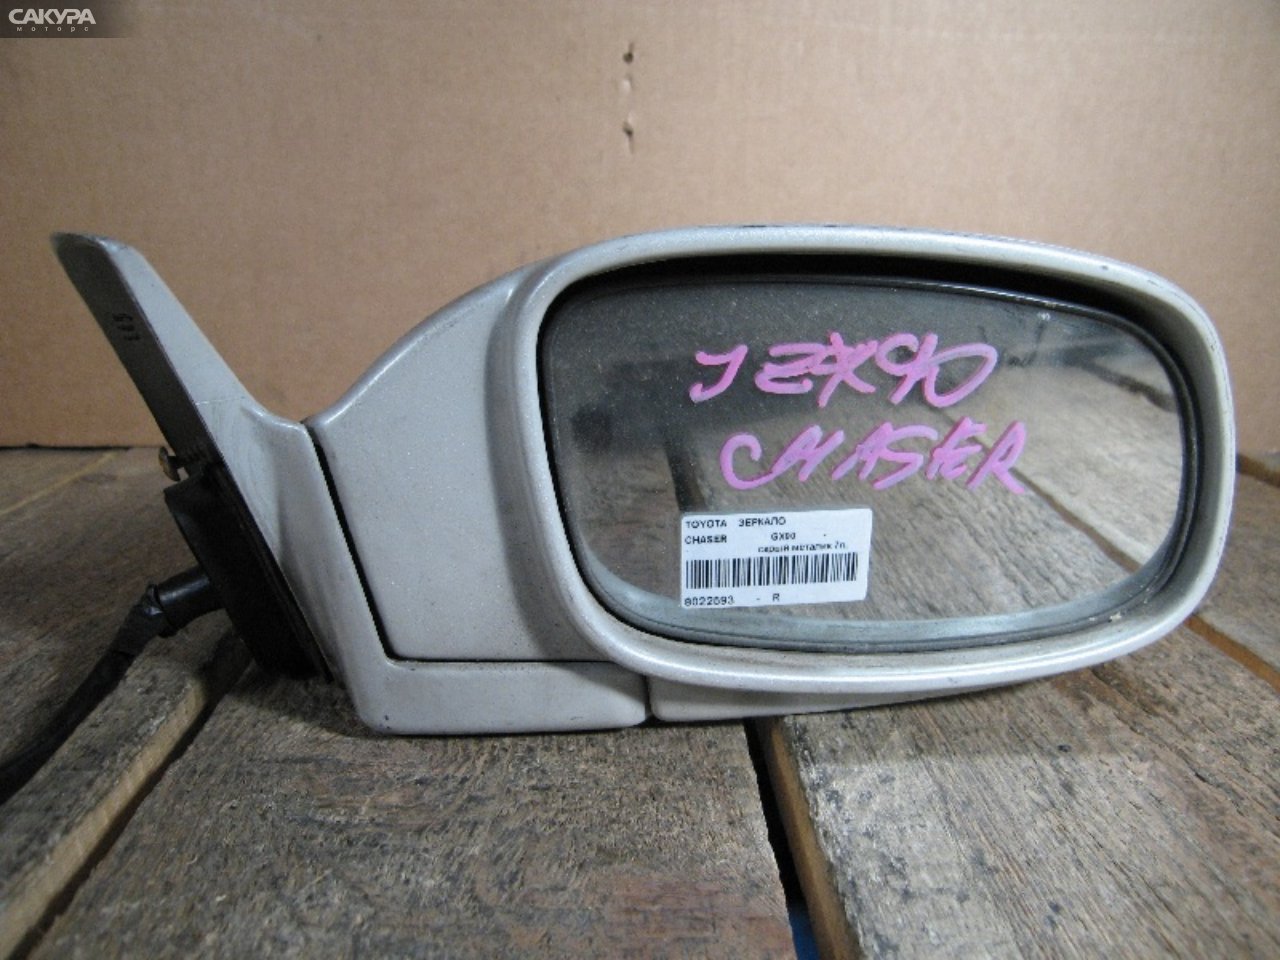 Зеркало боковое правое Toyota Chaser GX90: купить в Сакура Абакан.